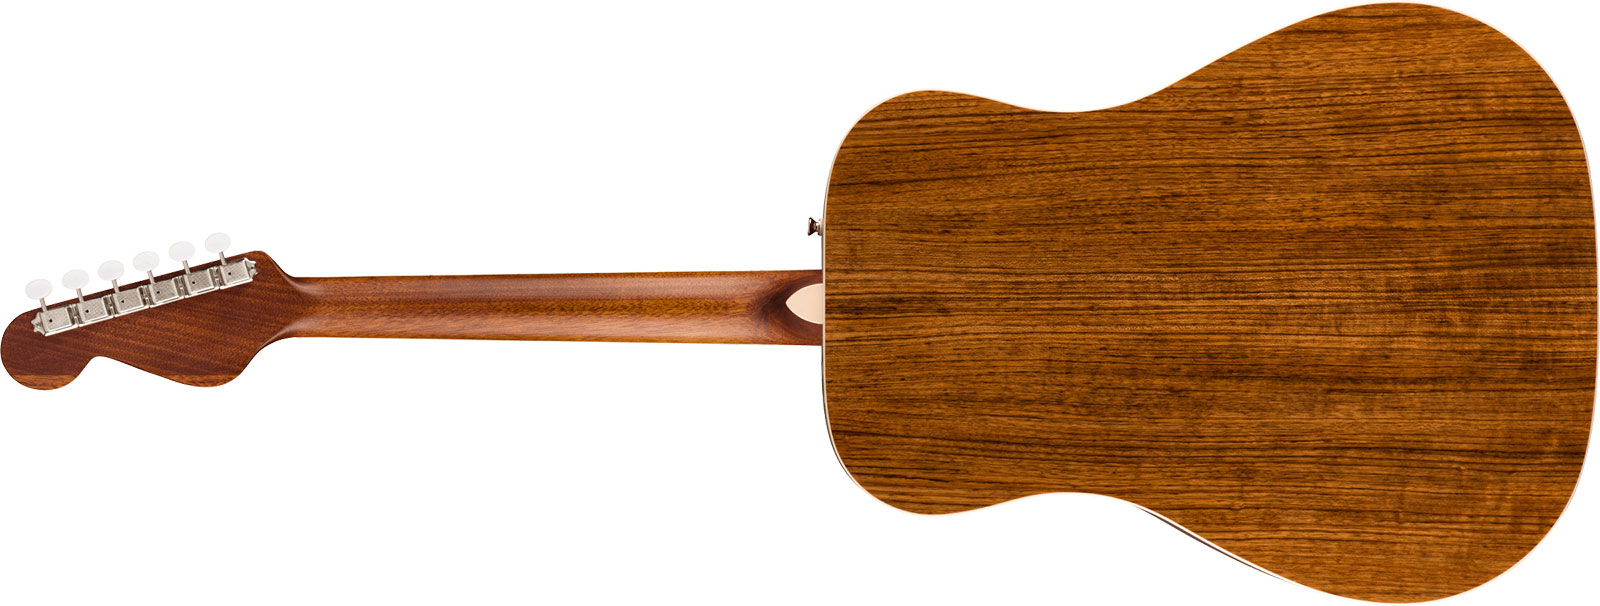 Fender King Vintage California Dreadnought Epicea Ovangkol Ova - Aged Natural - Elektroakustische Gitarre - Variation 1